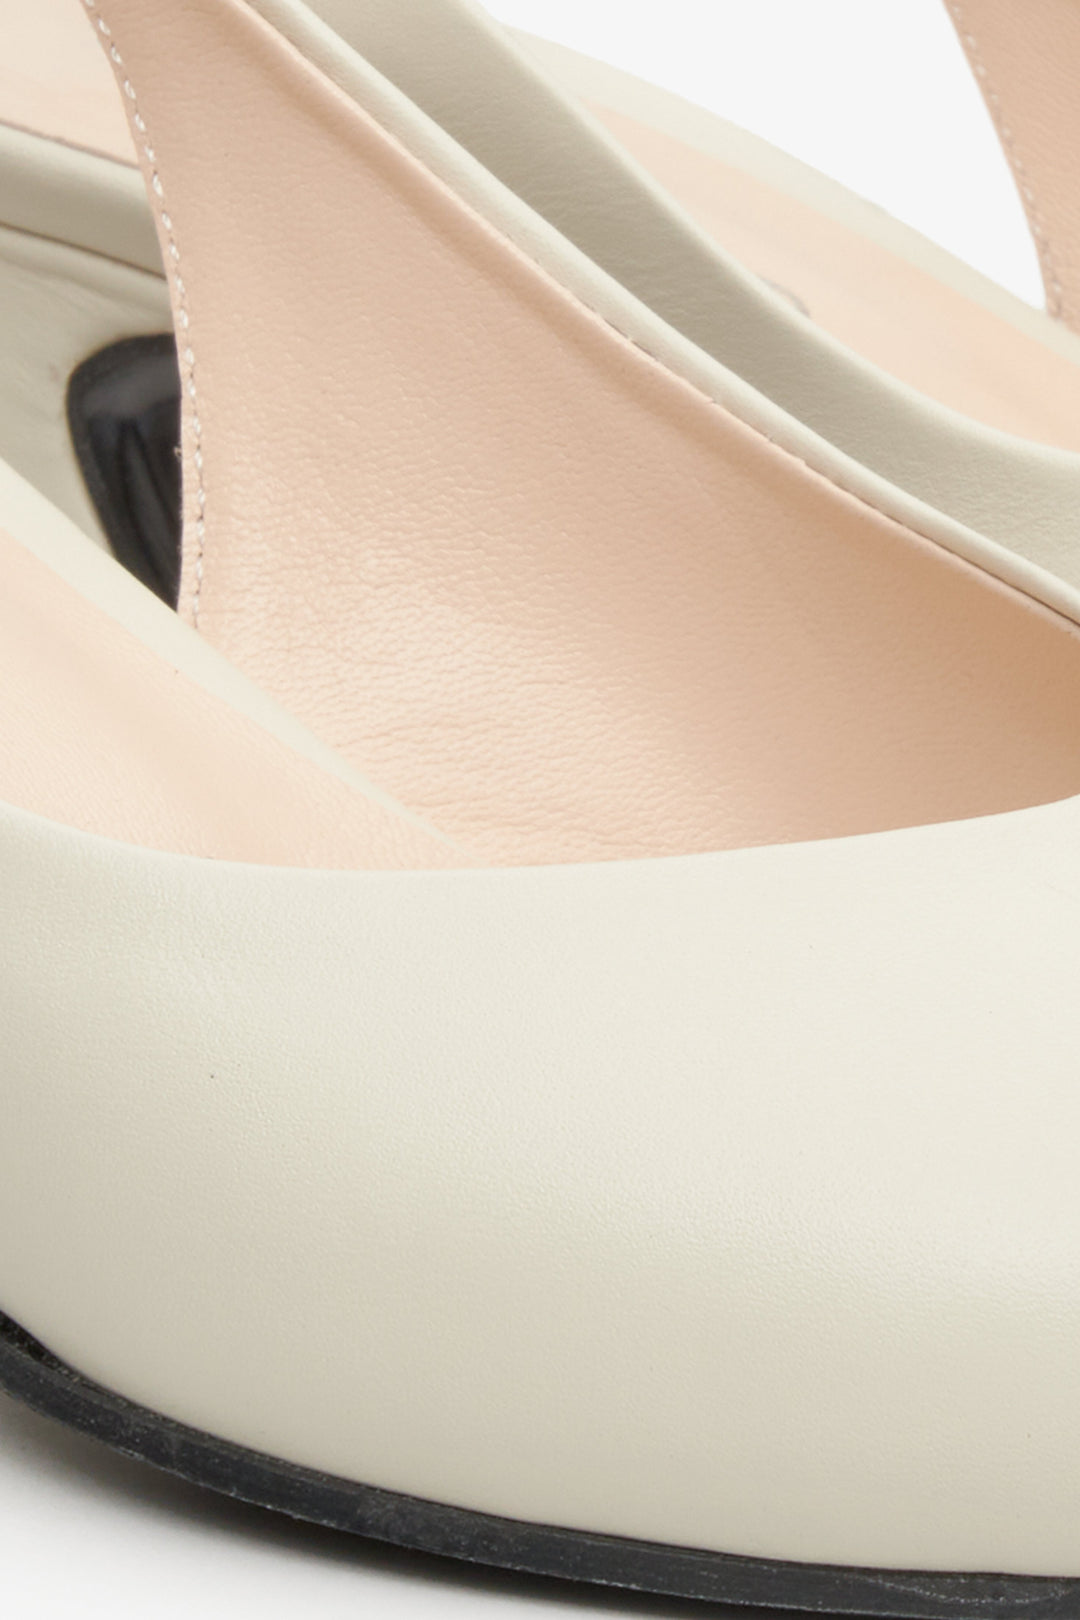 Women's light beige leather open-back pumps by Estro - close-up on the details.